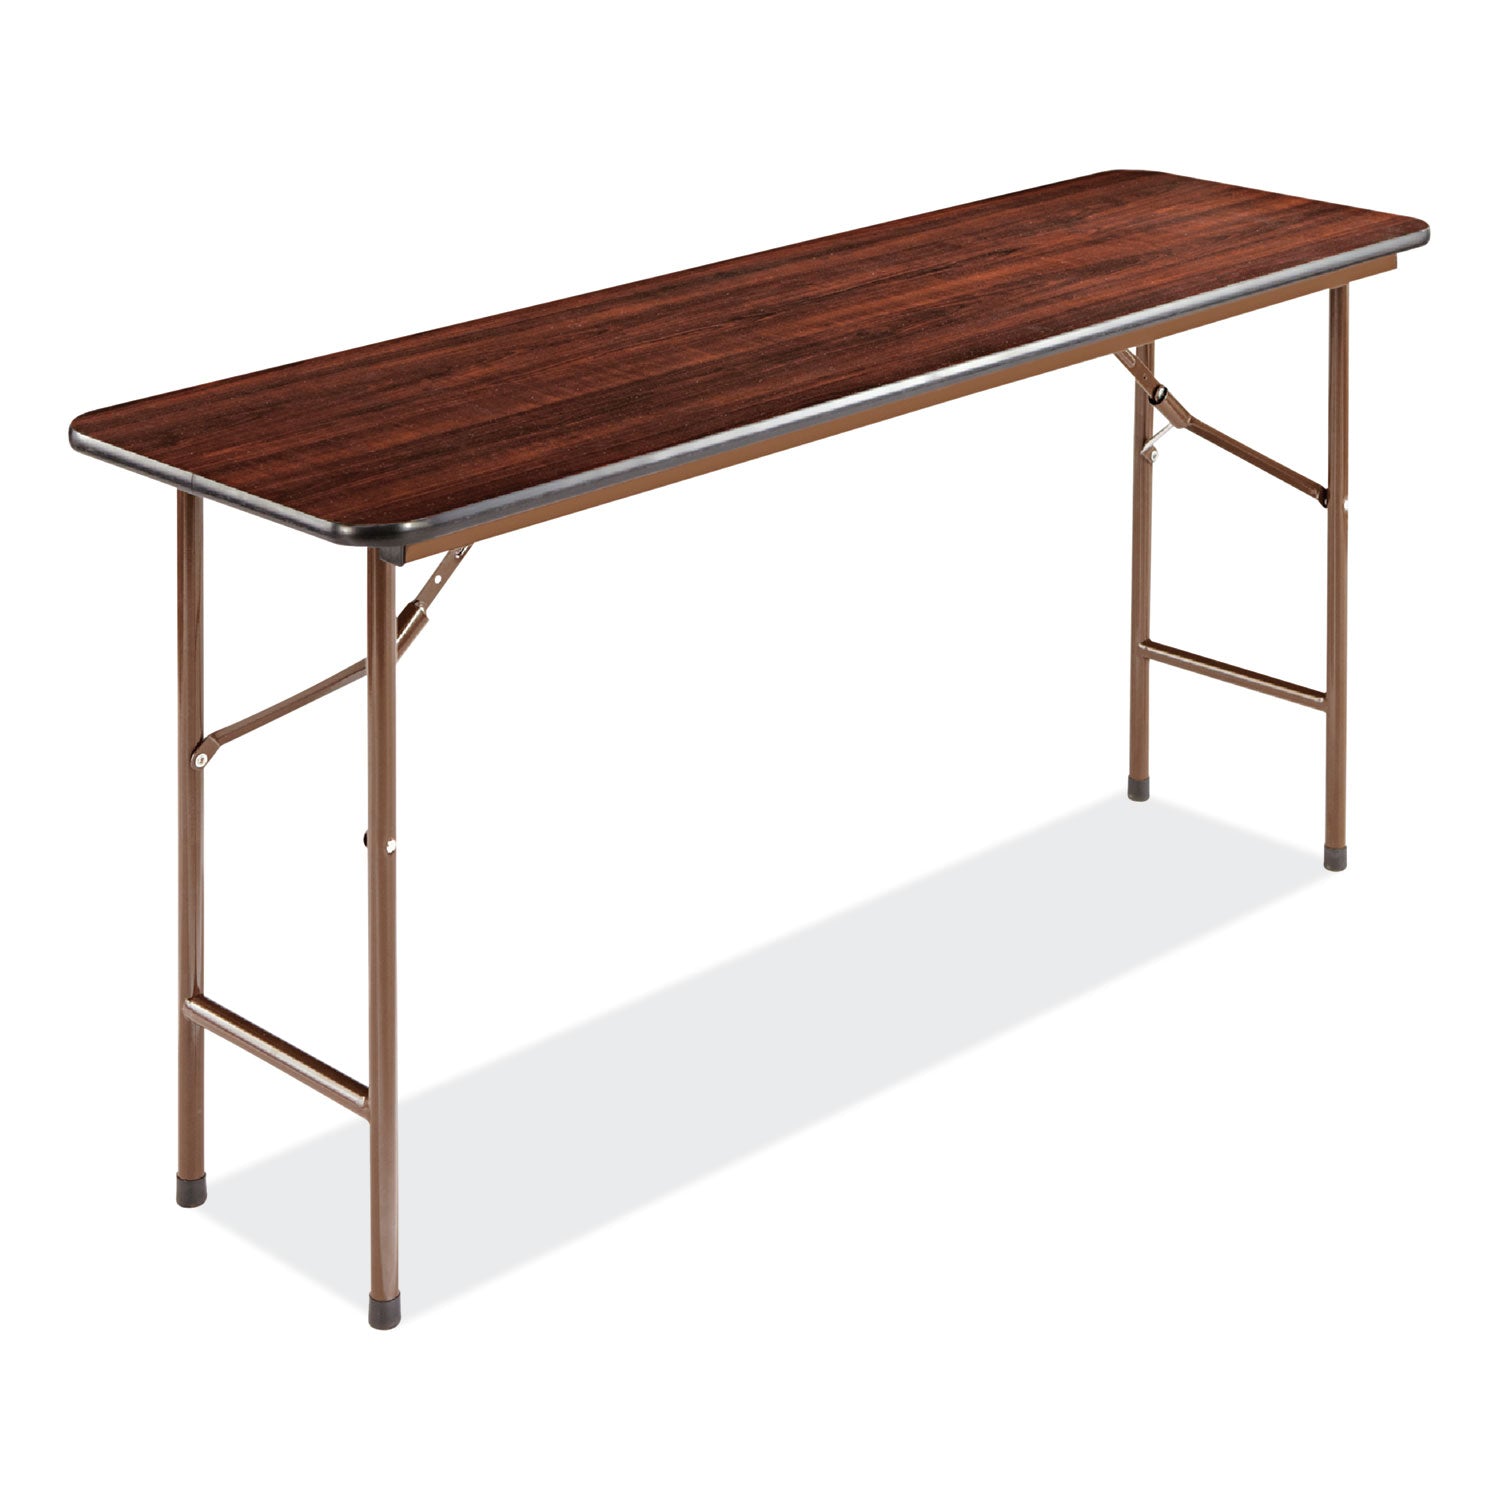 wood-folding-table-rectangular-5988w-x-1775d-x-2913h-mahogany_aleft726018my - 1